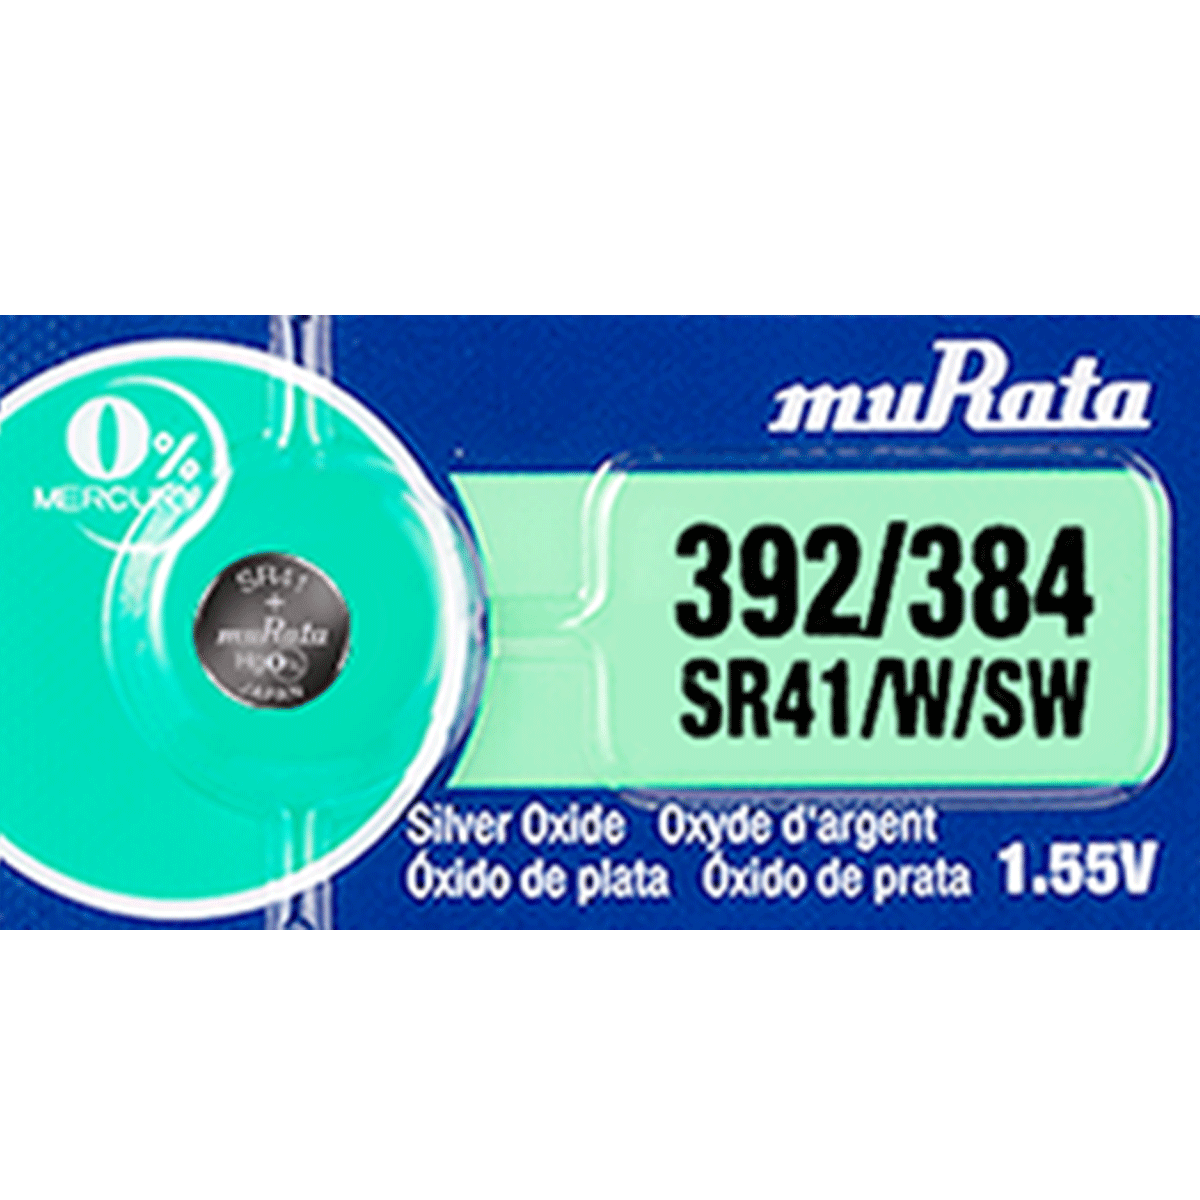 Murata 392/384 Battery  (SR41W) (formerly SONY) 1.55V Silver Oxide (1 Battery)